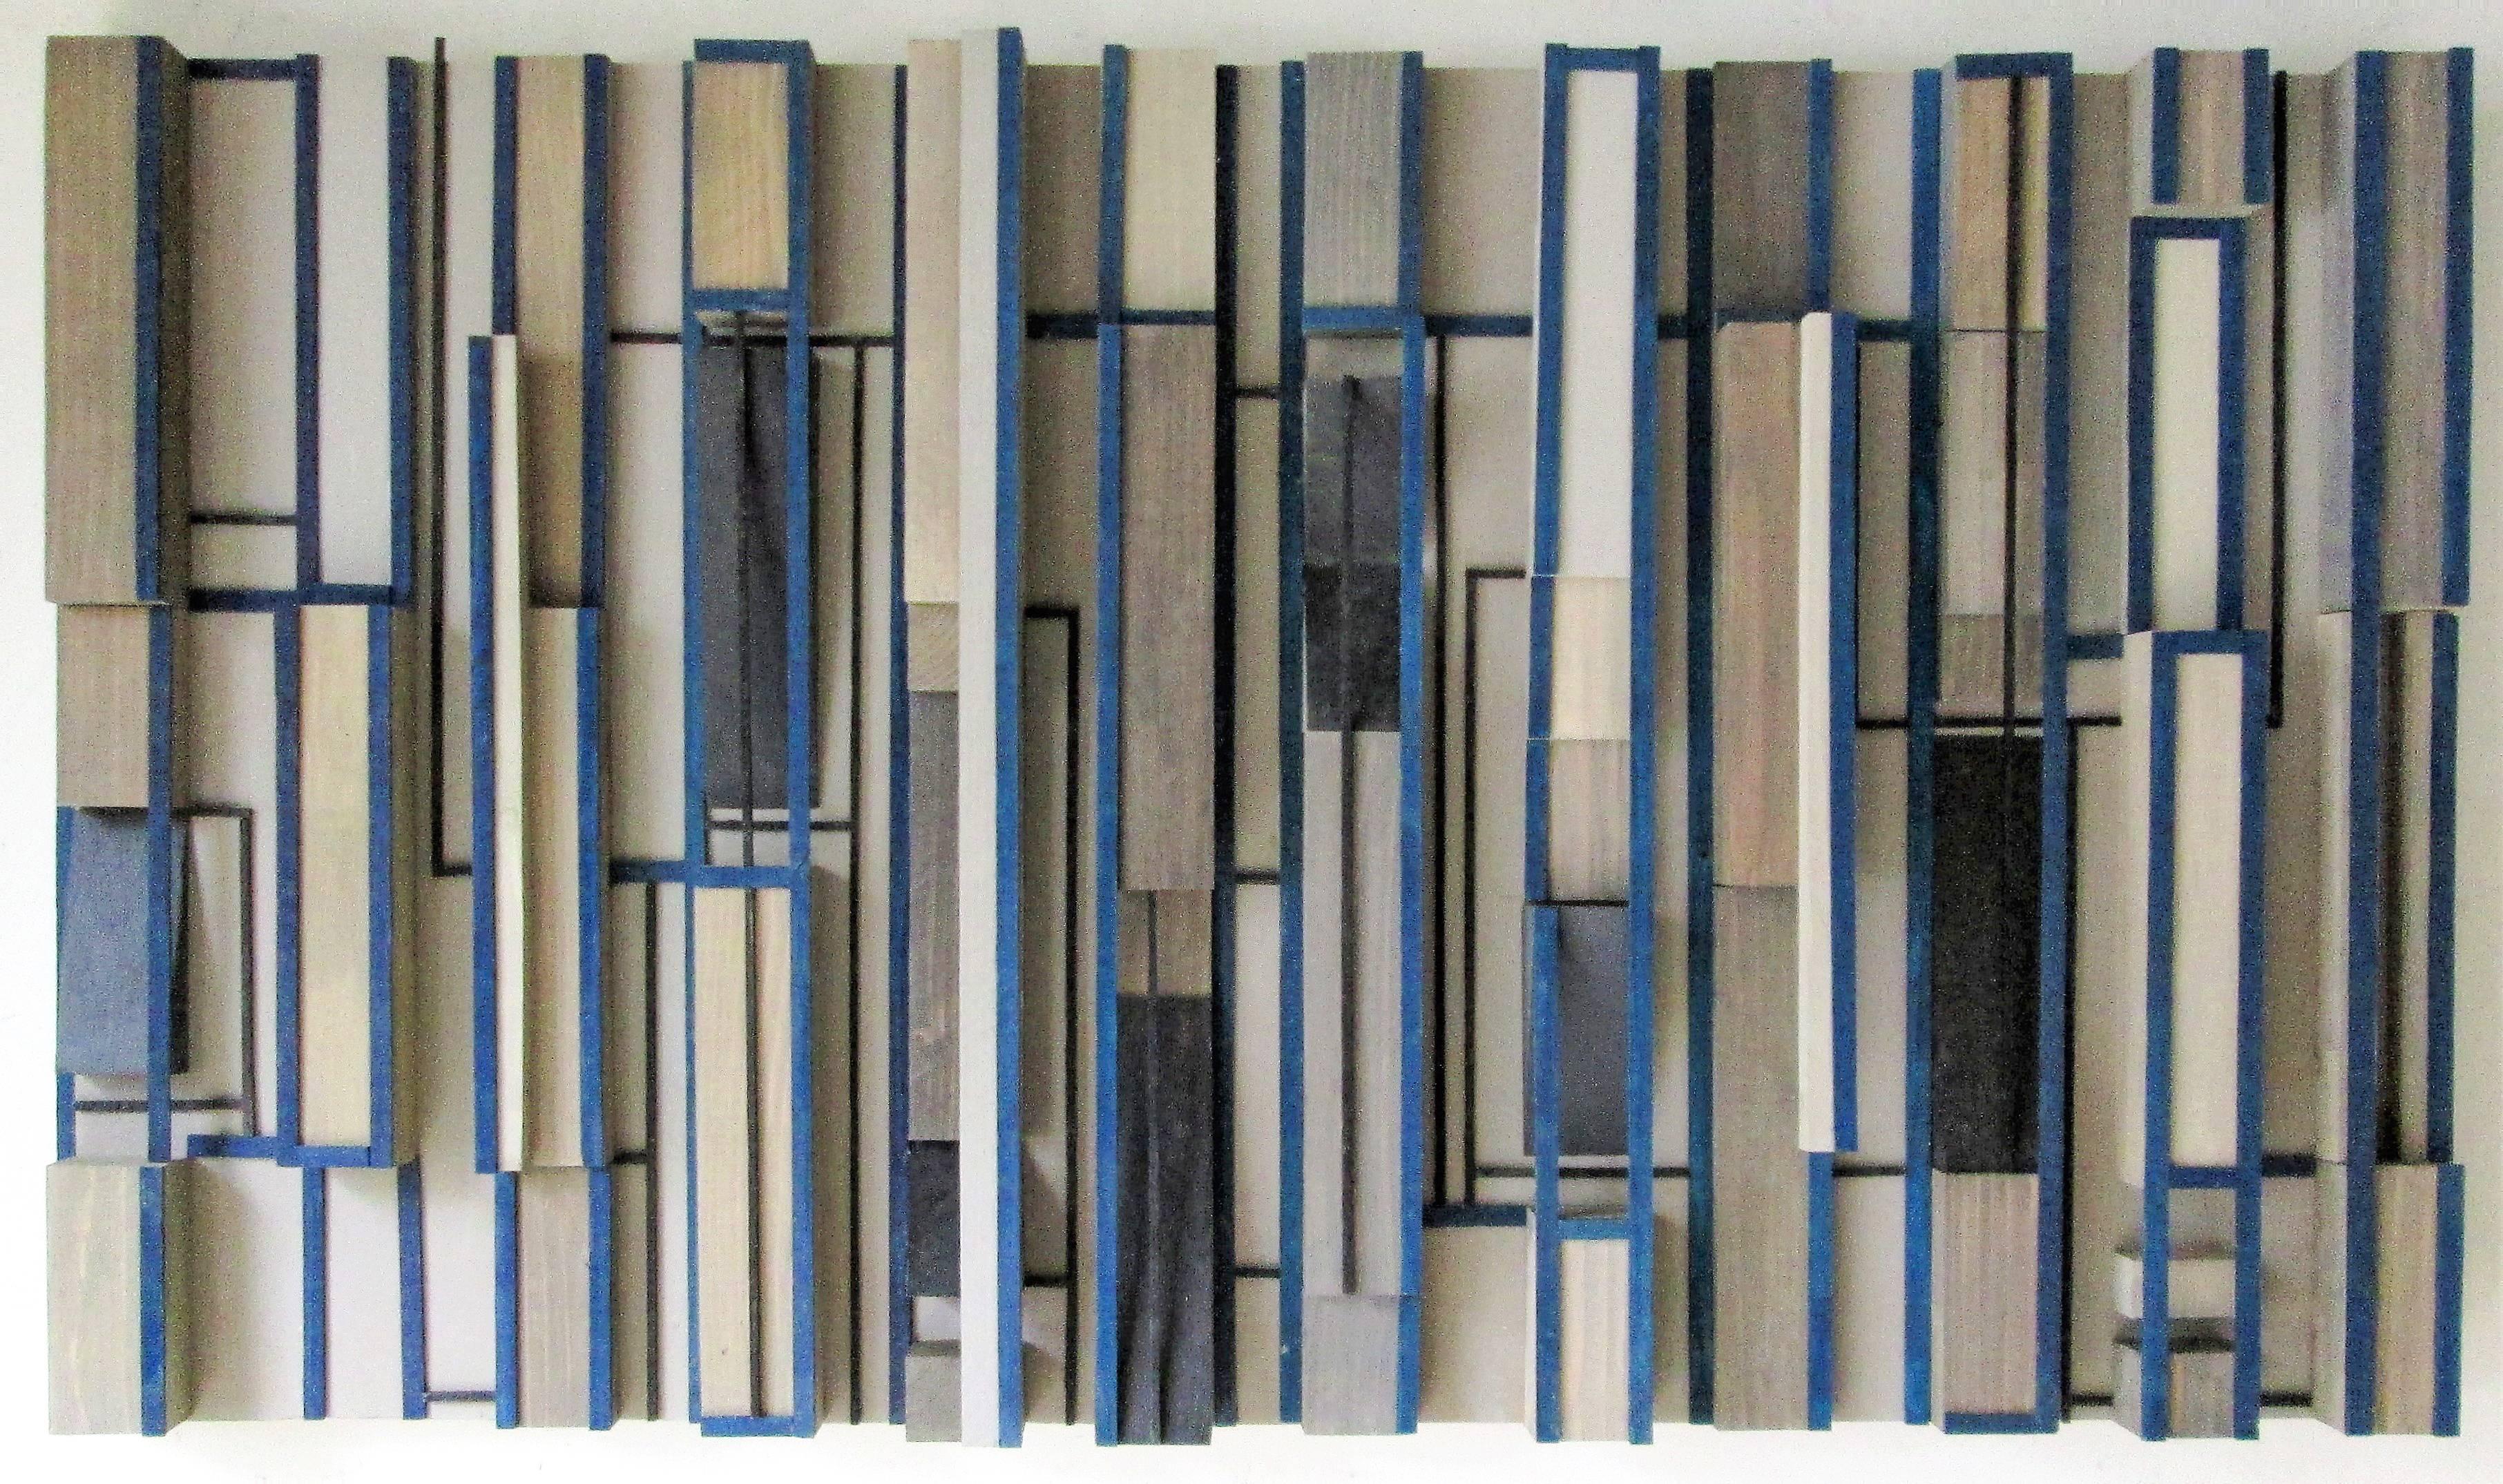 Networking (Abstract Modern 3-D Wooden Wall Sculpture in Blue, Black & Beige)